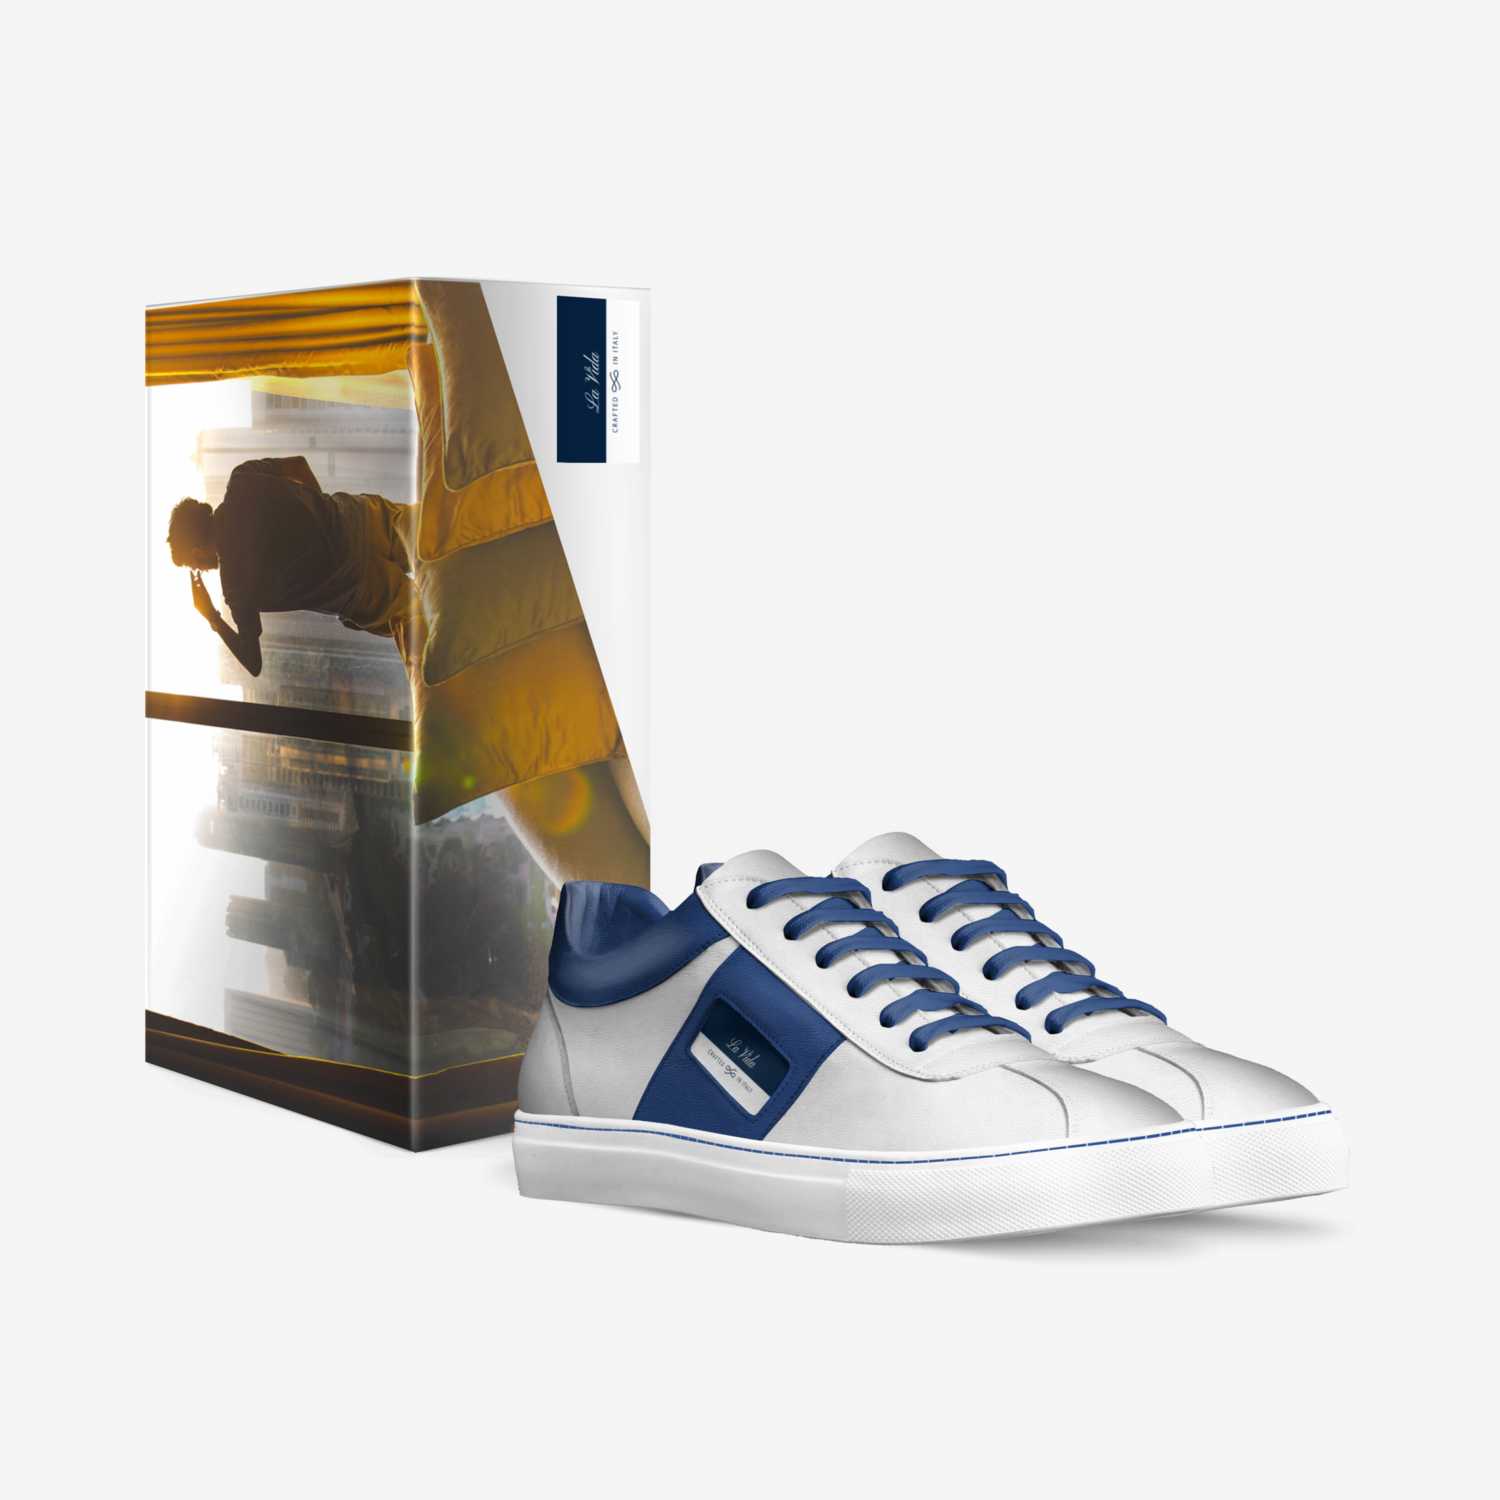 La Vida custom made in Italy shoes by Zuriel Suarez | Box view